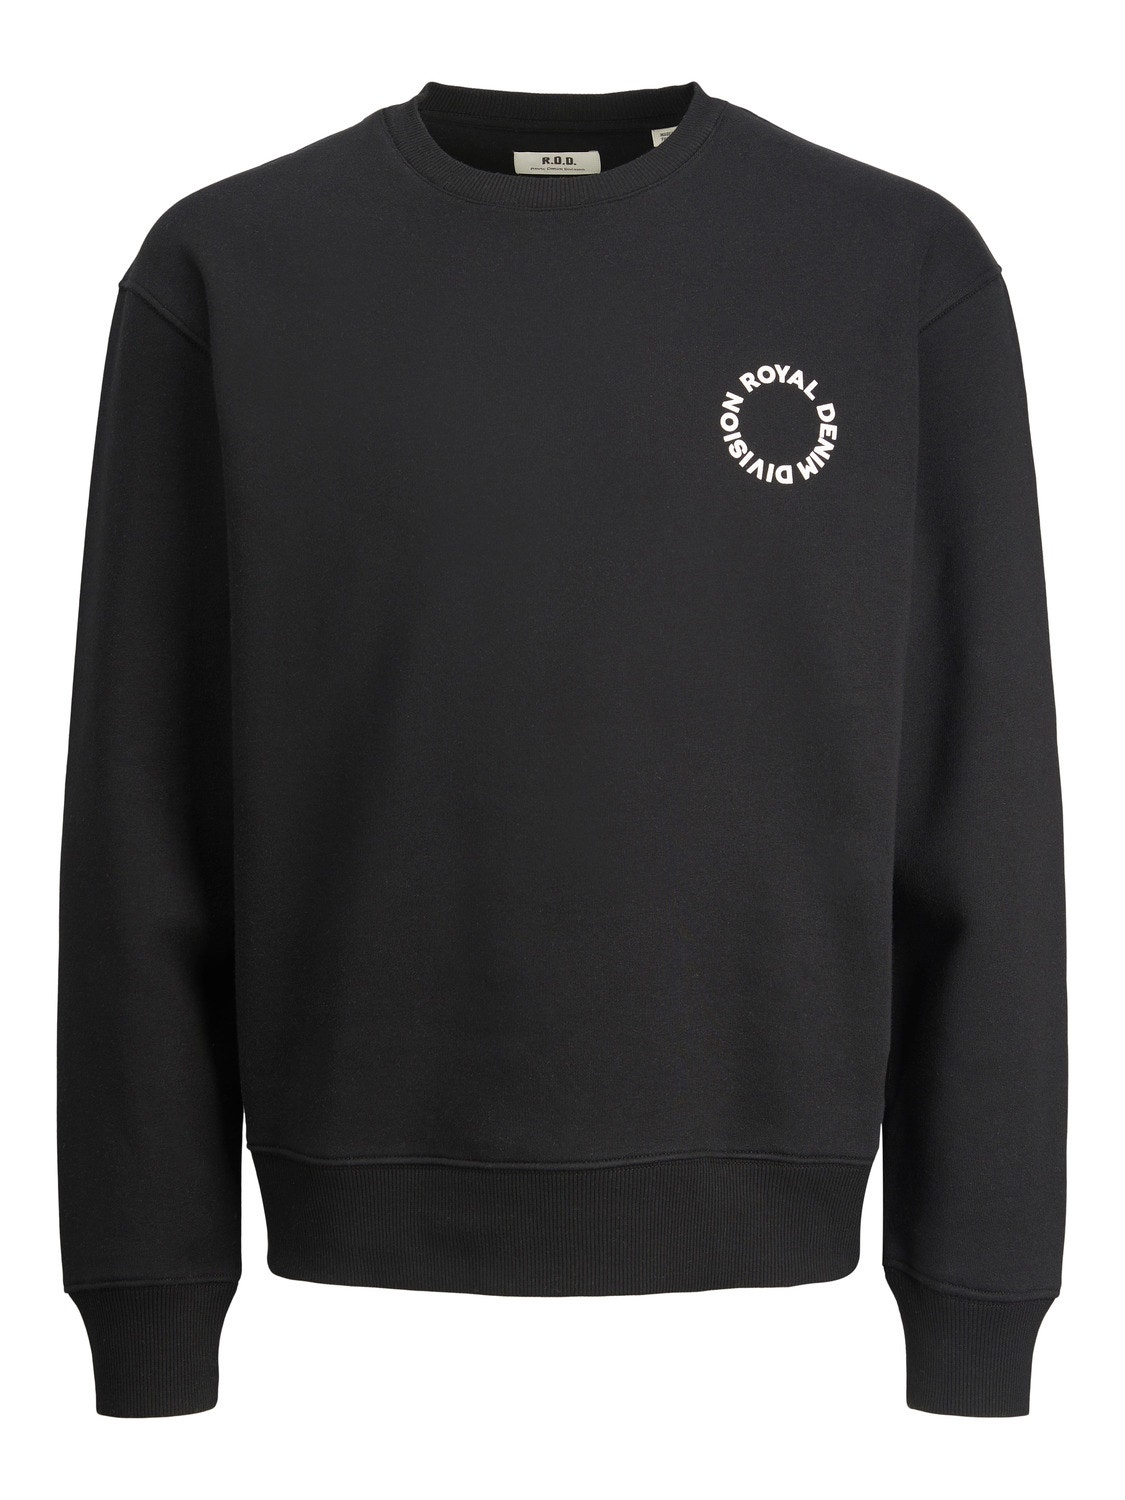 Jack & Jones RDD Logo Sweatshirt -Black - 12218244